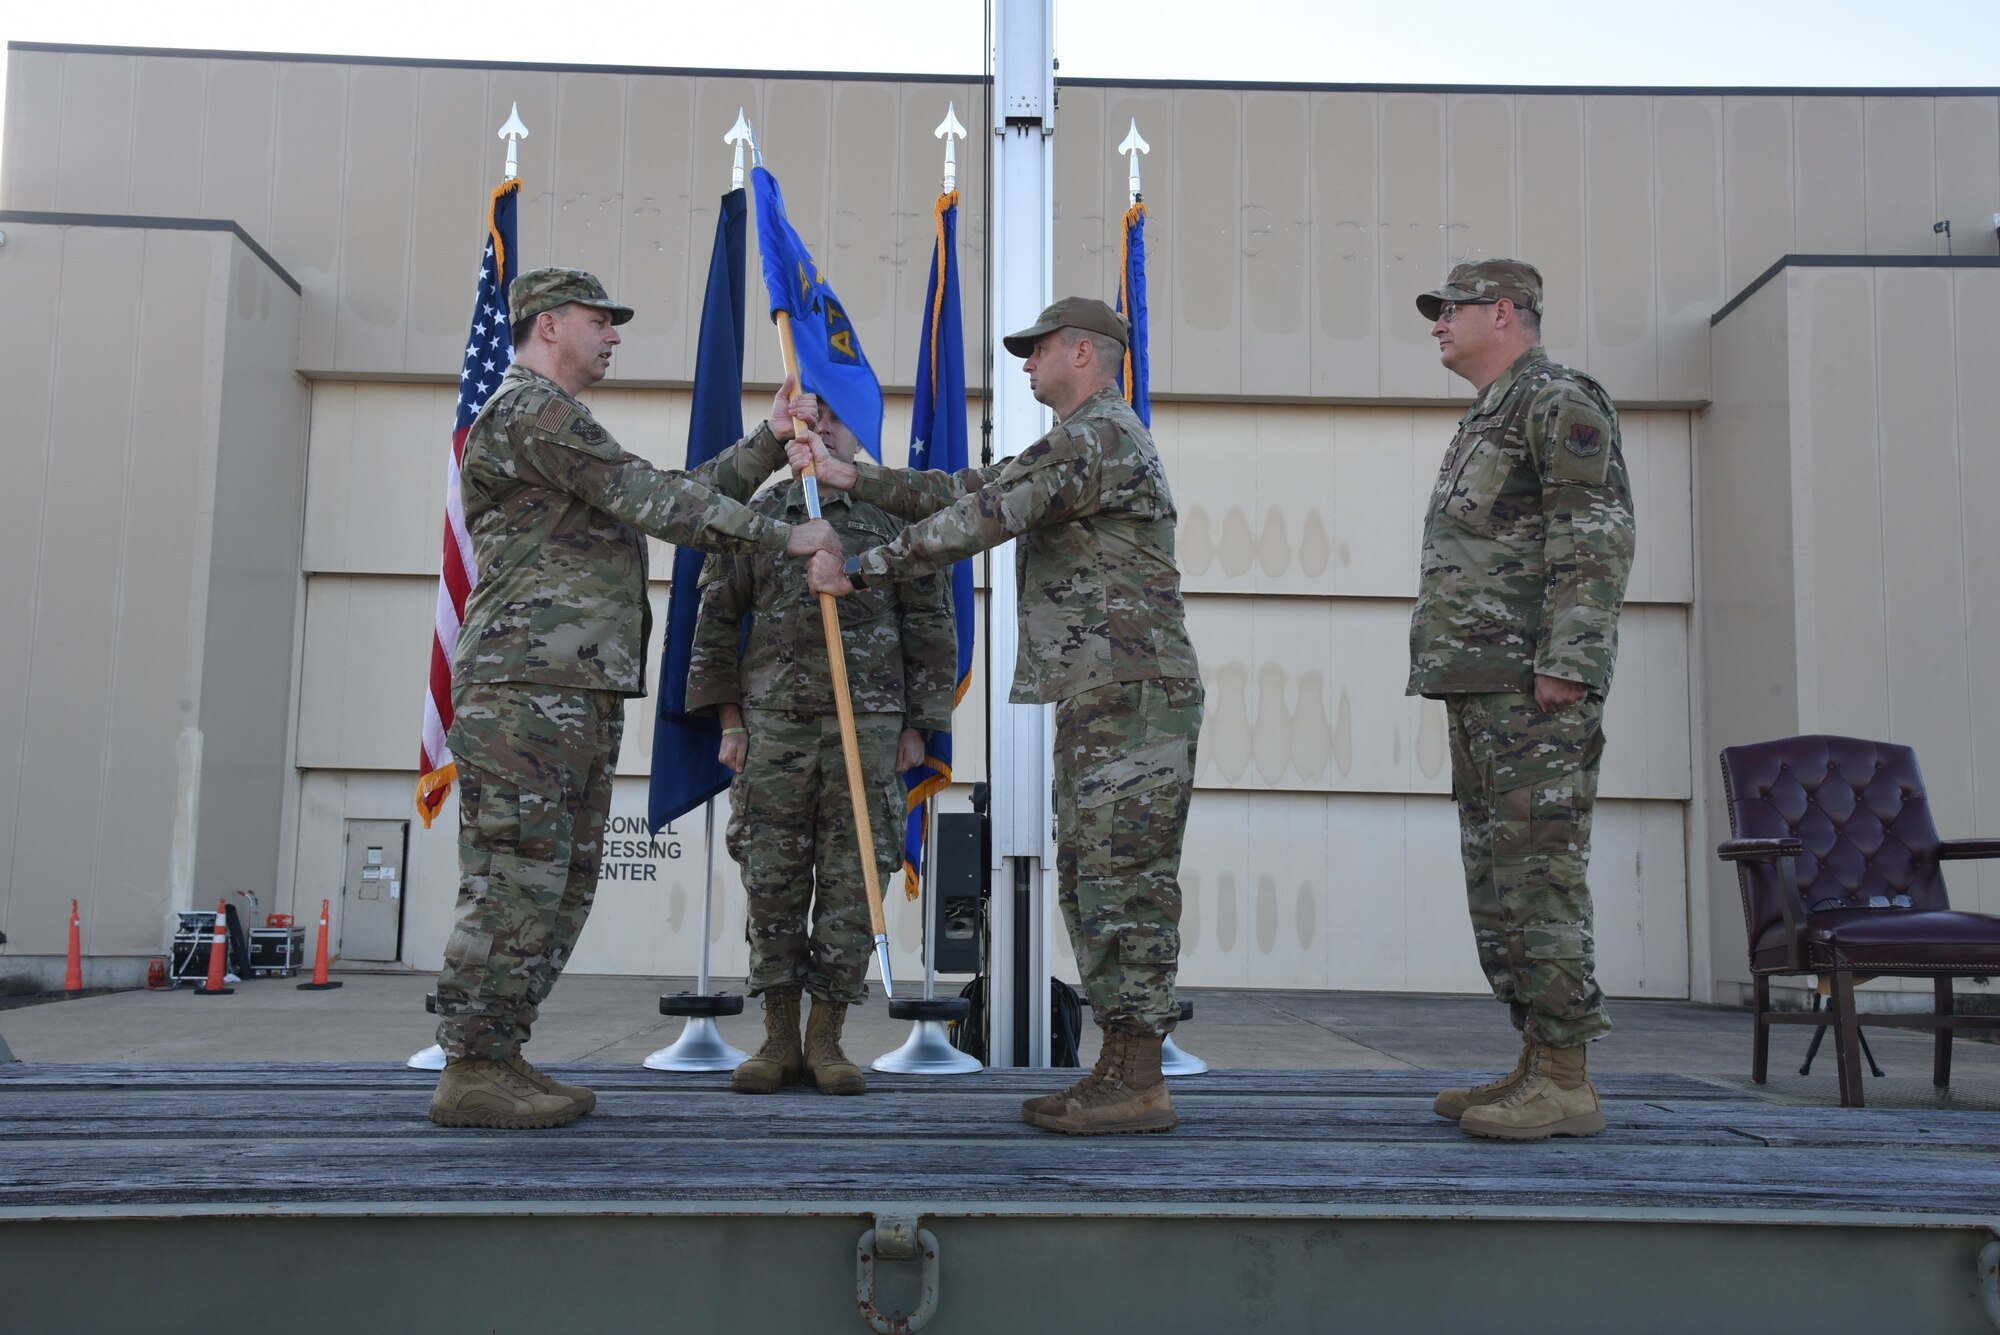 A man in an Air Force uniform hands over a flag.